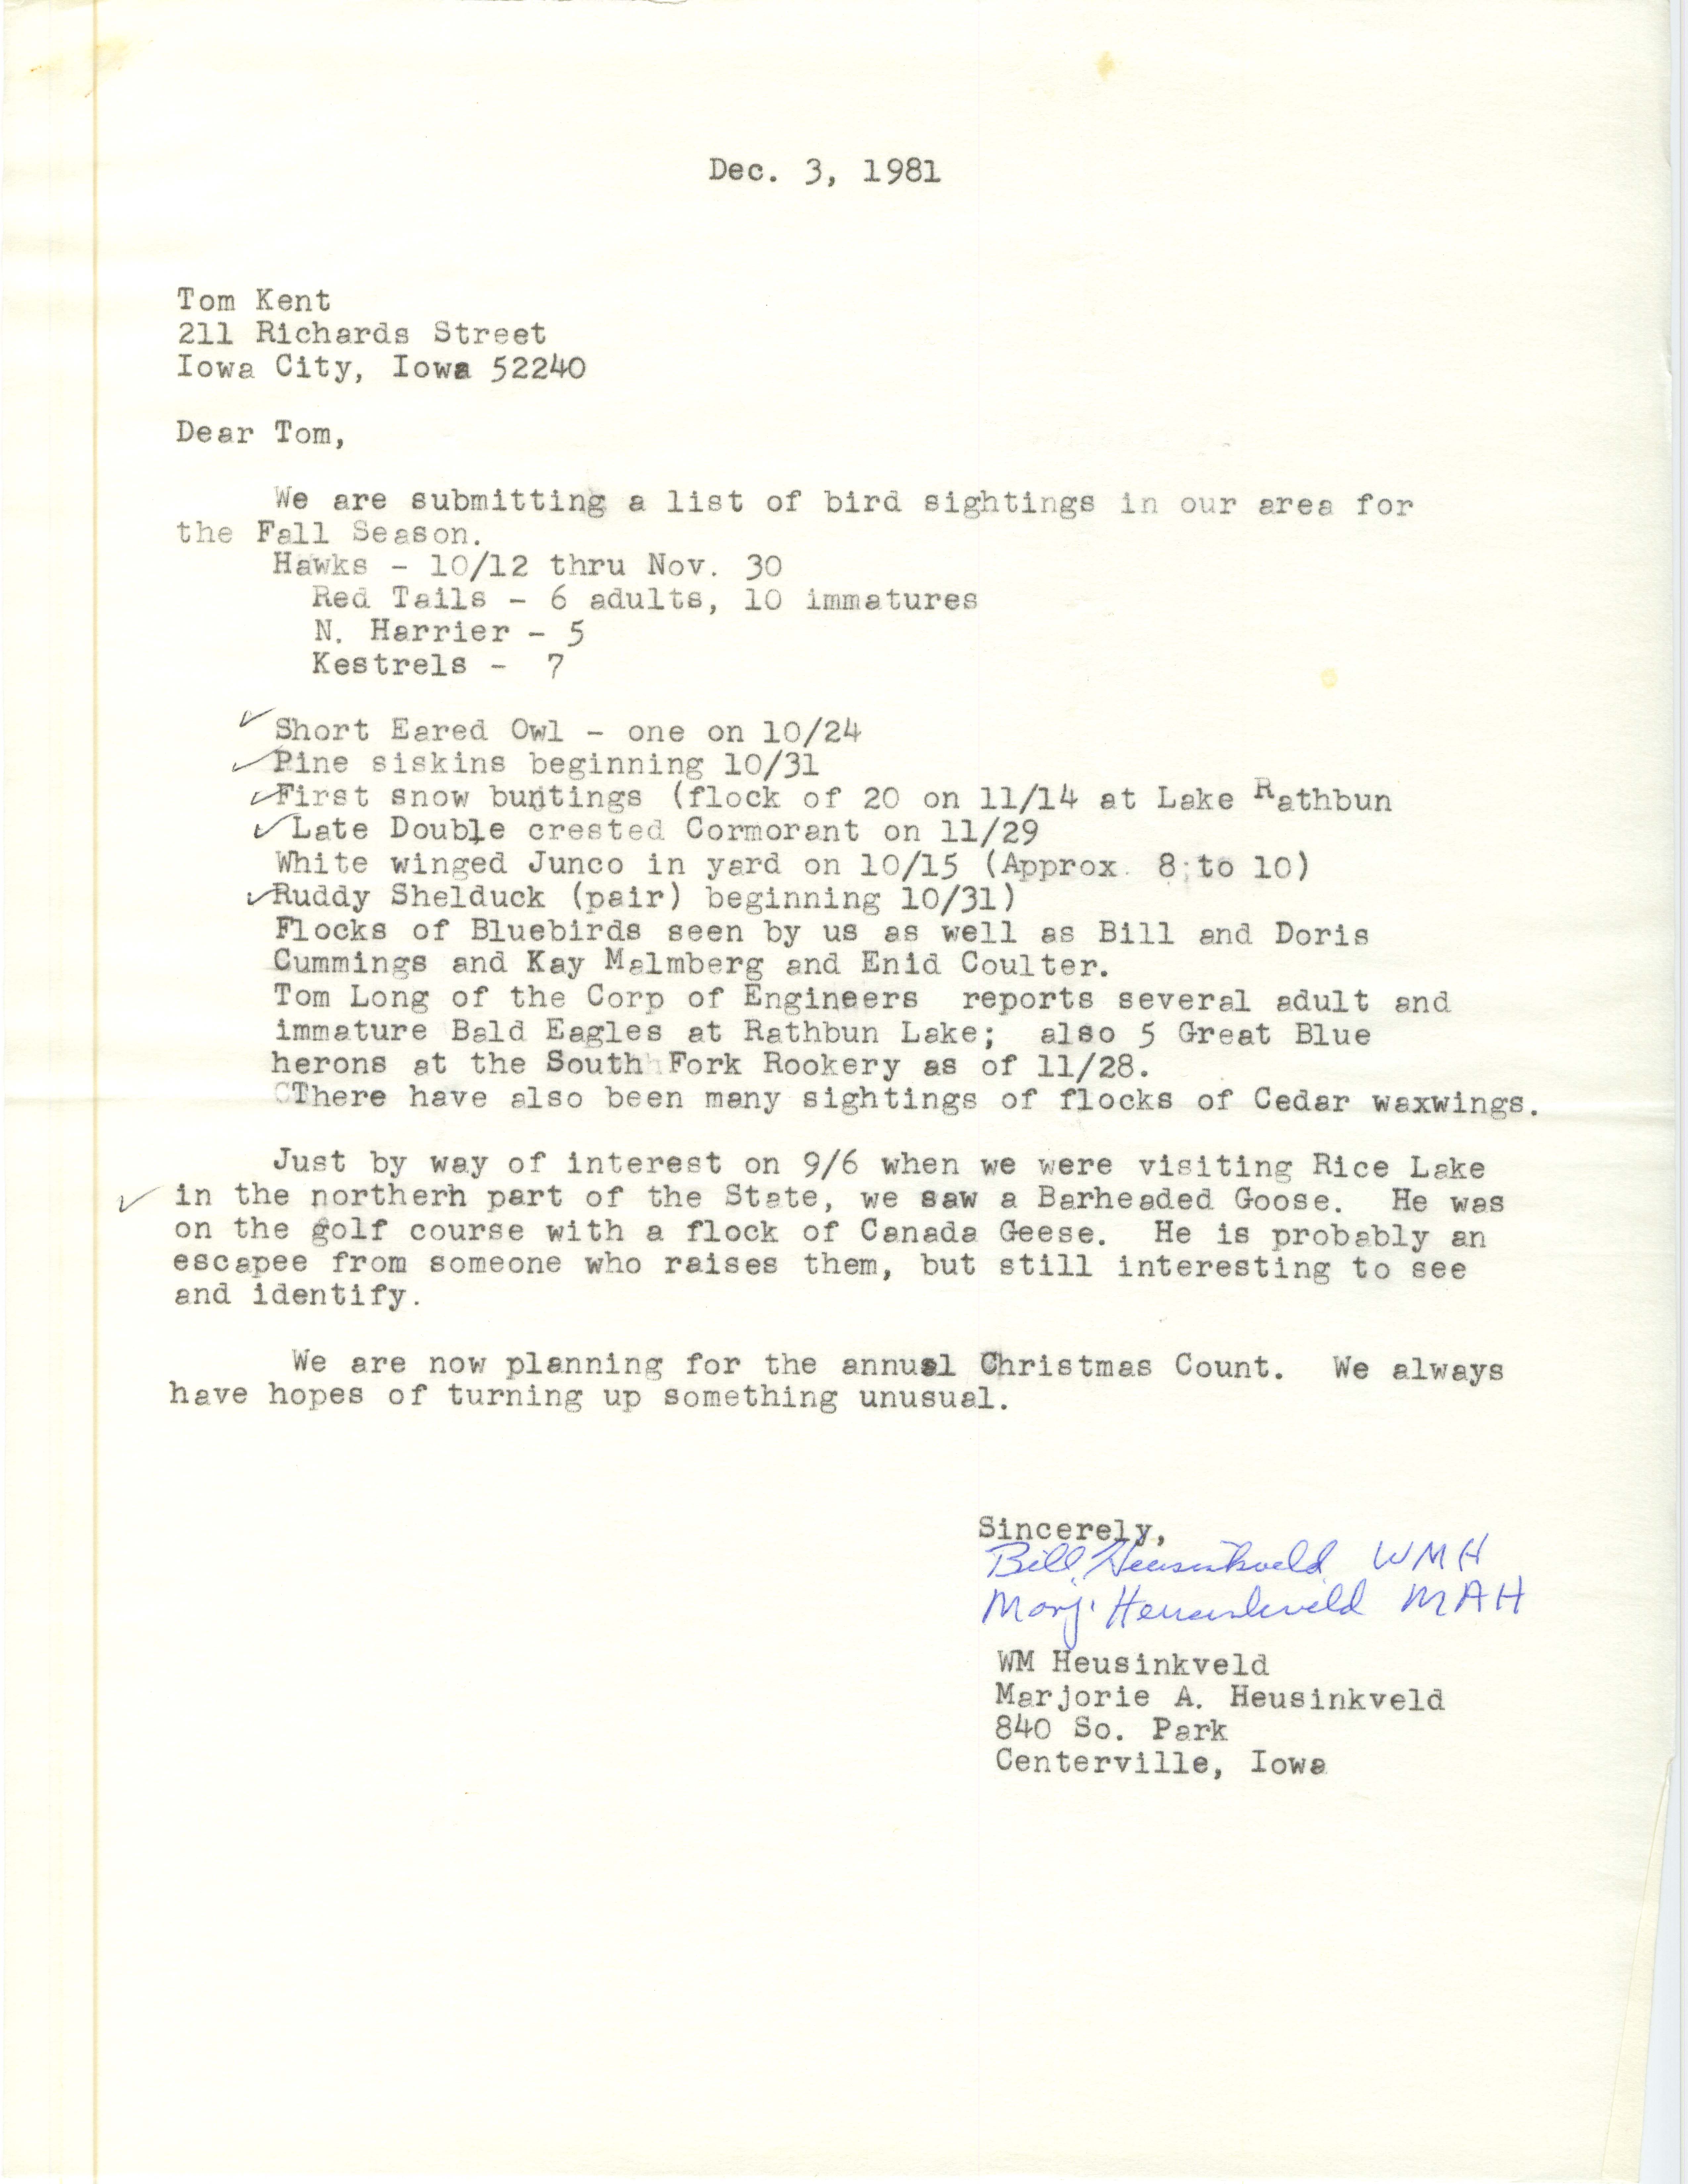 Bill Heusinkveld and Marjorie Heusinkveld letter to Thomas H. Kent regarding field notes, December 3, 1981